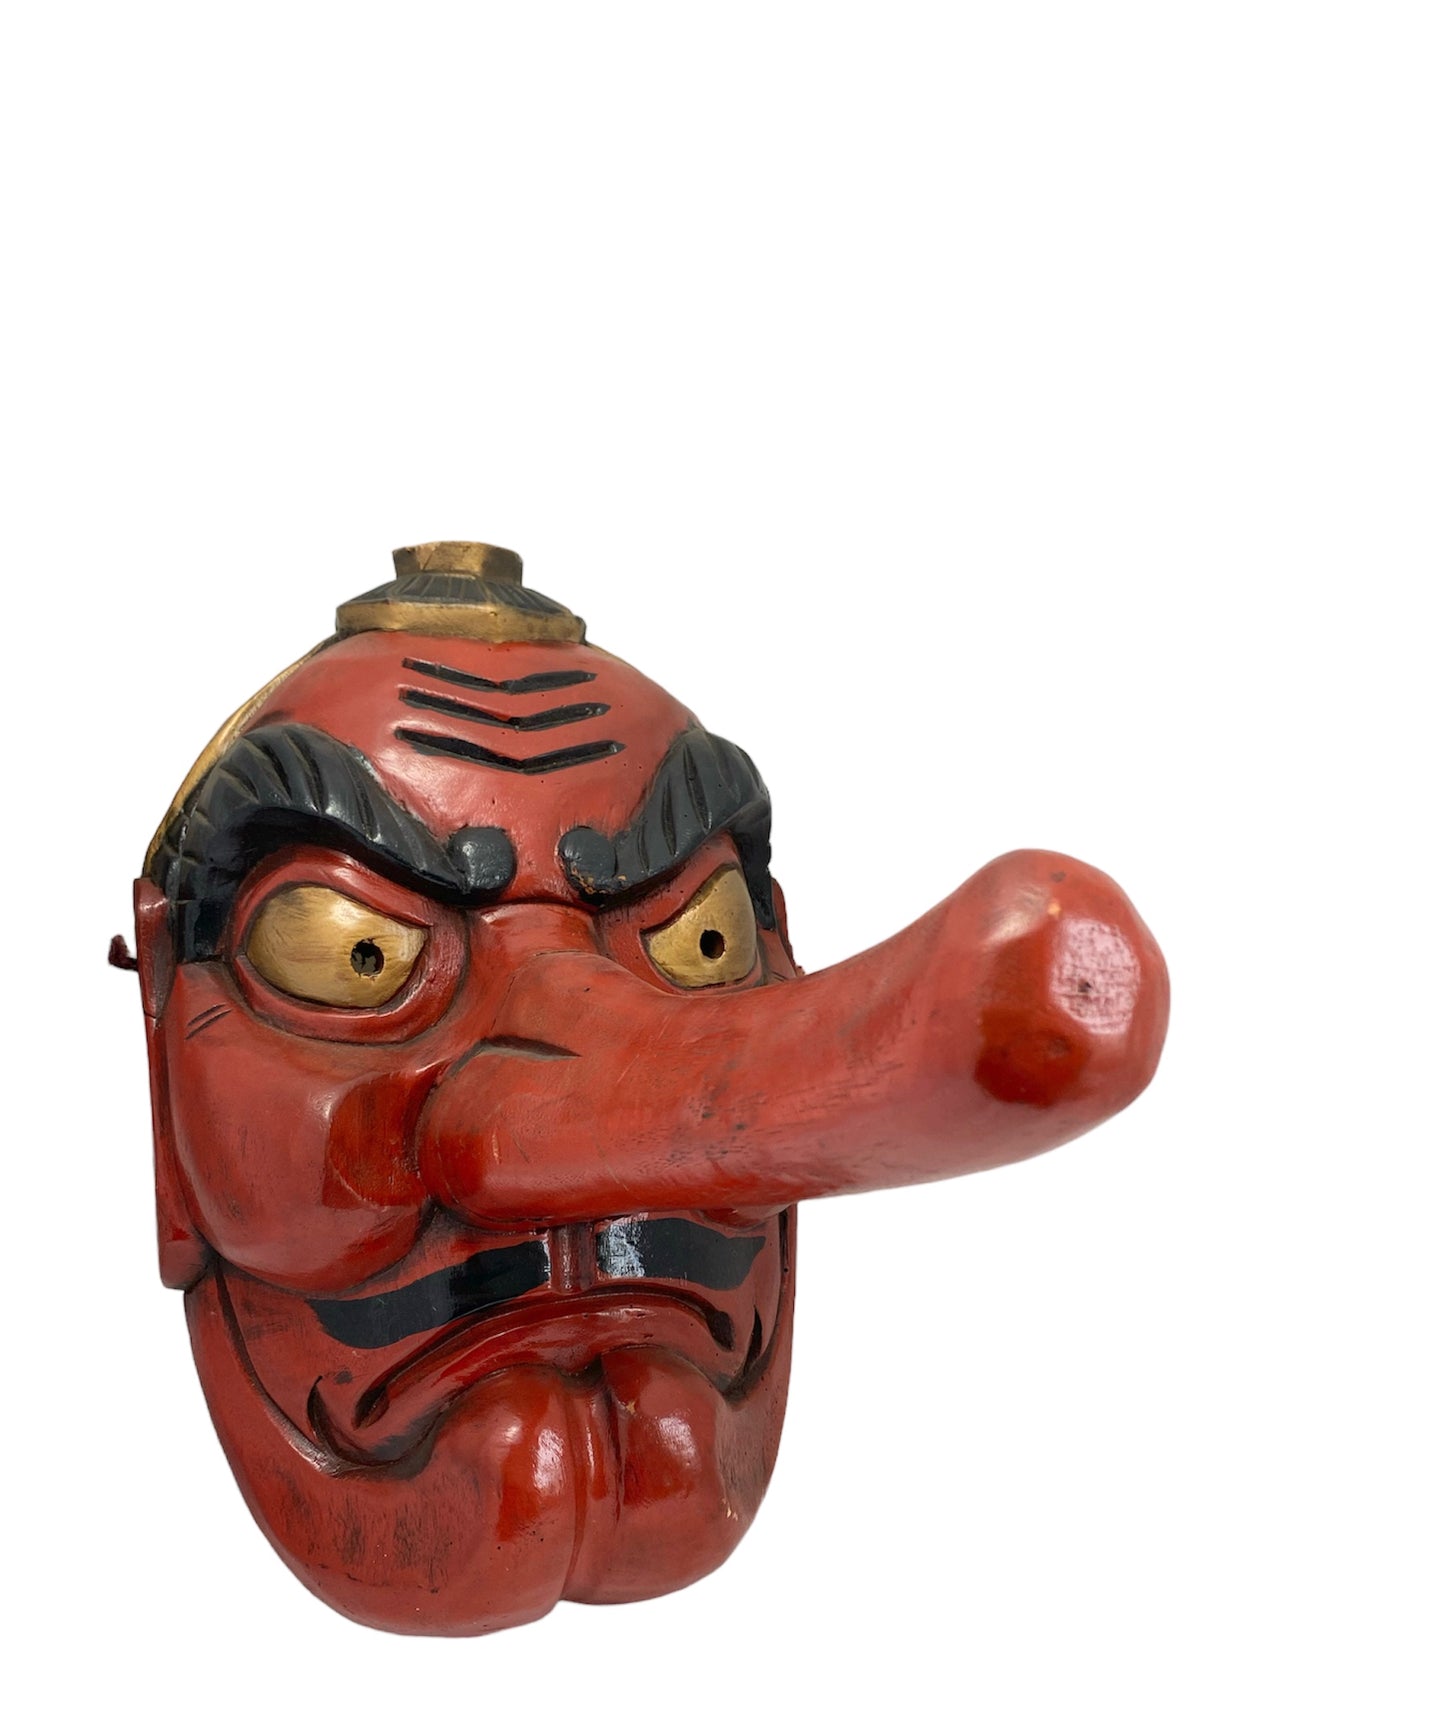 Decorative mask of a tengu